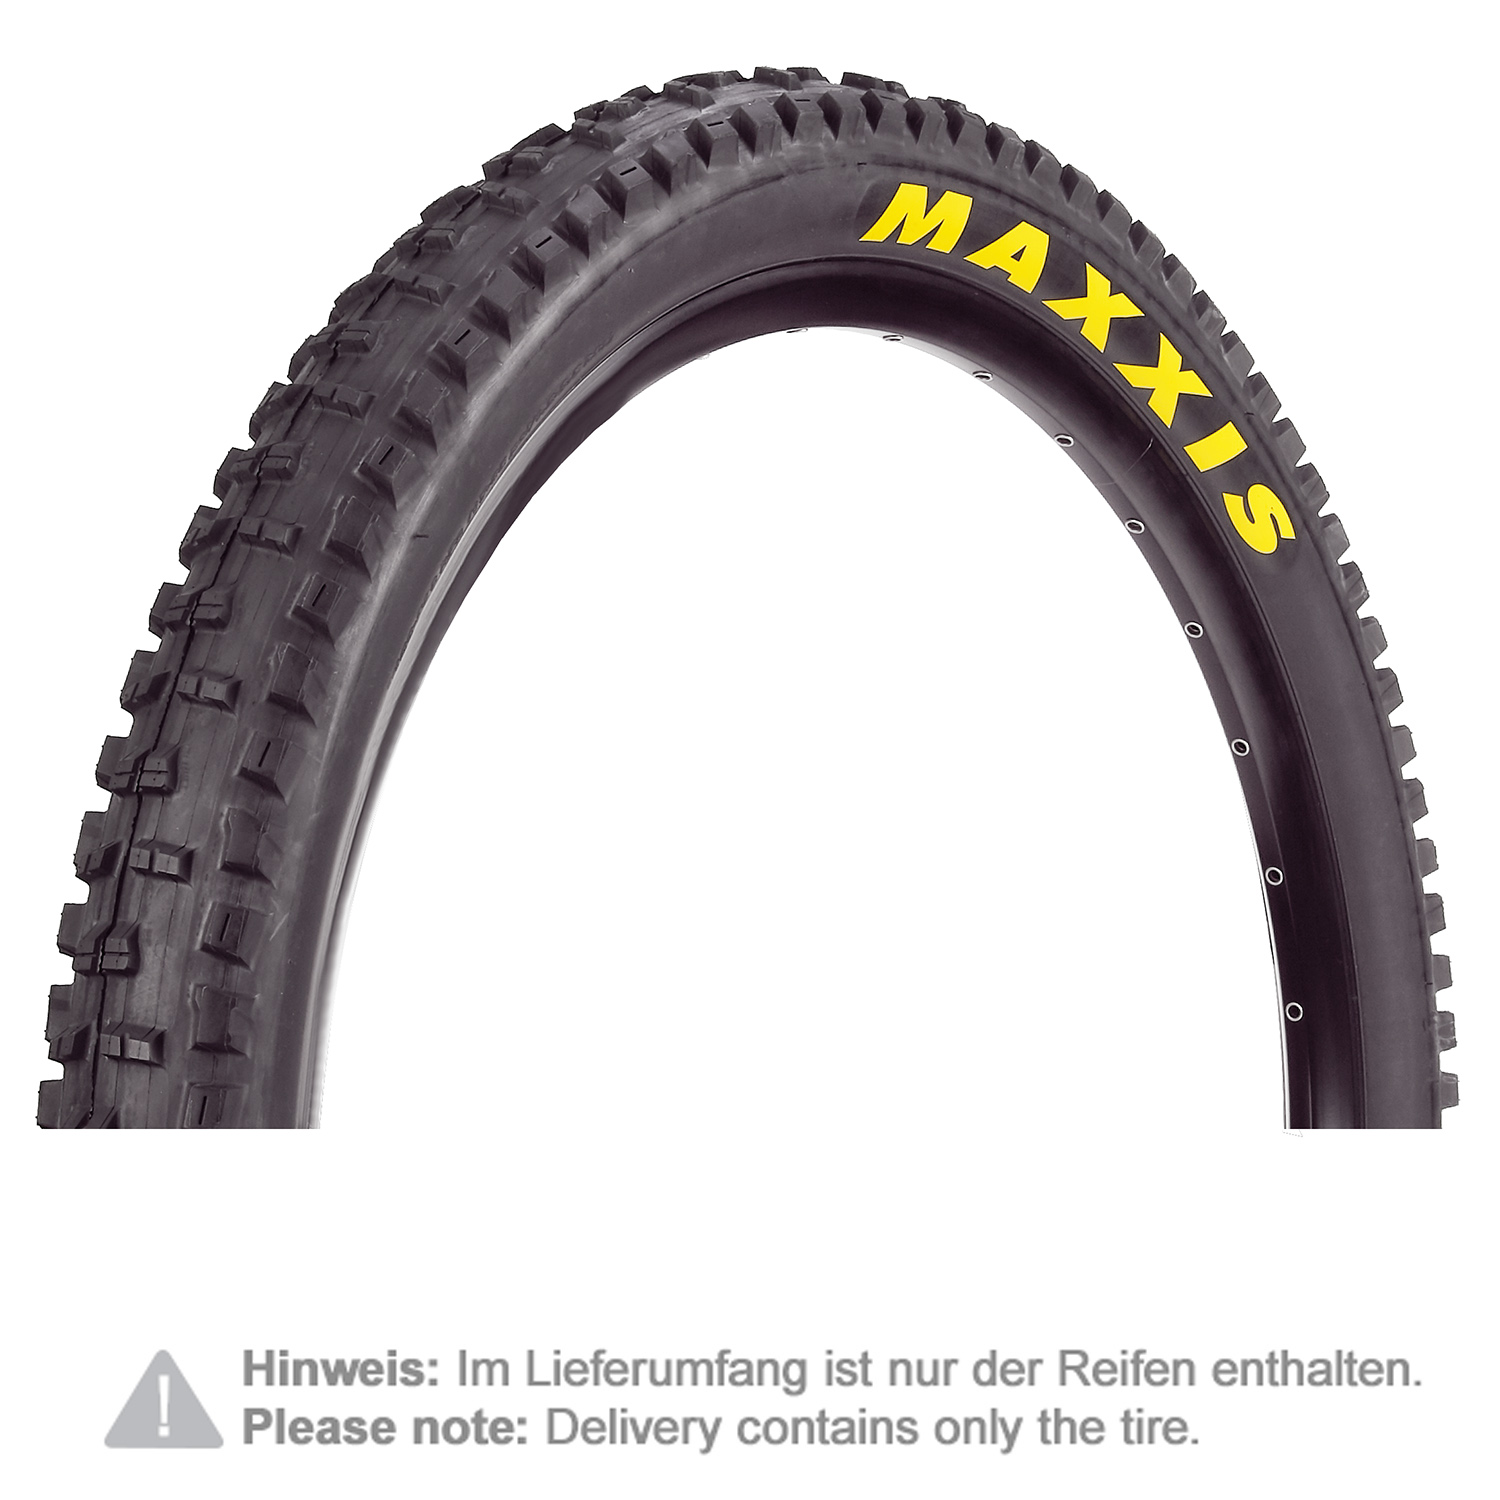 Maxxis MTB Tire HighRoller II + Black, 27.5 x 2.80 Inch, Tubeless Ready, EXO 3CMaxxTerra, Foldable